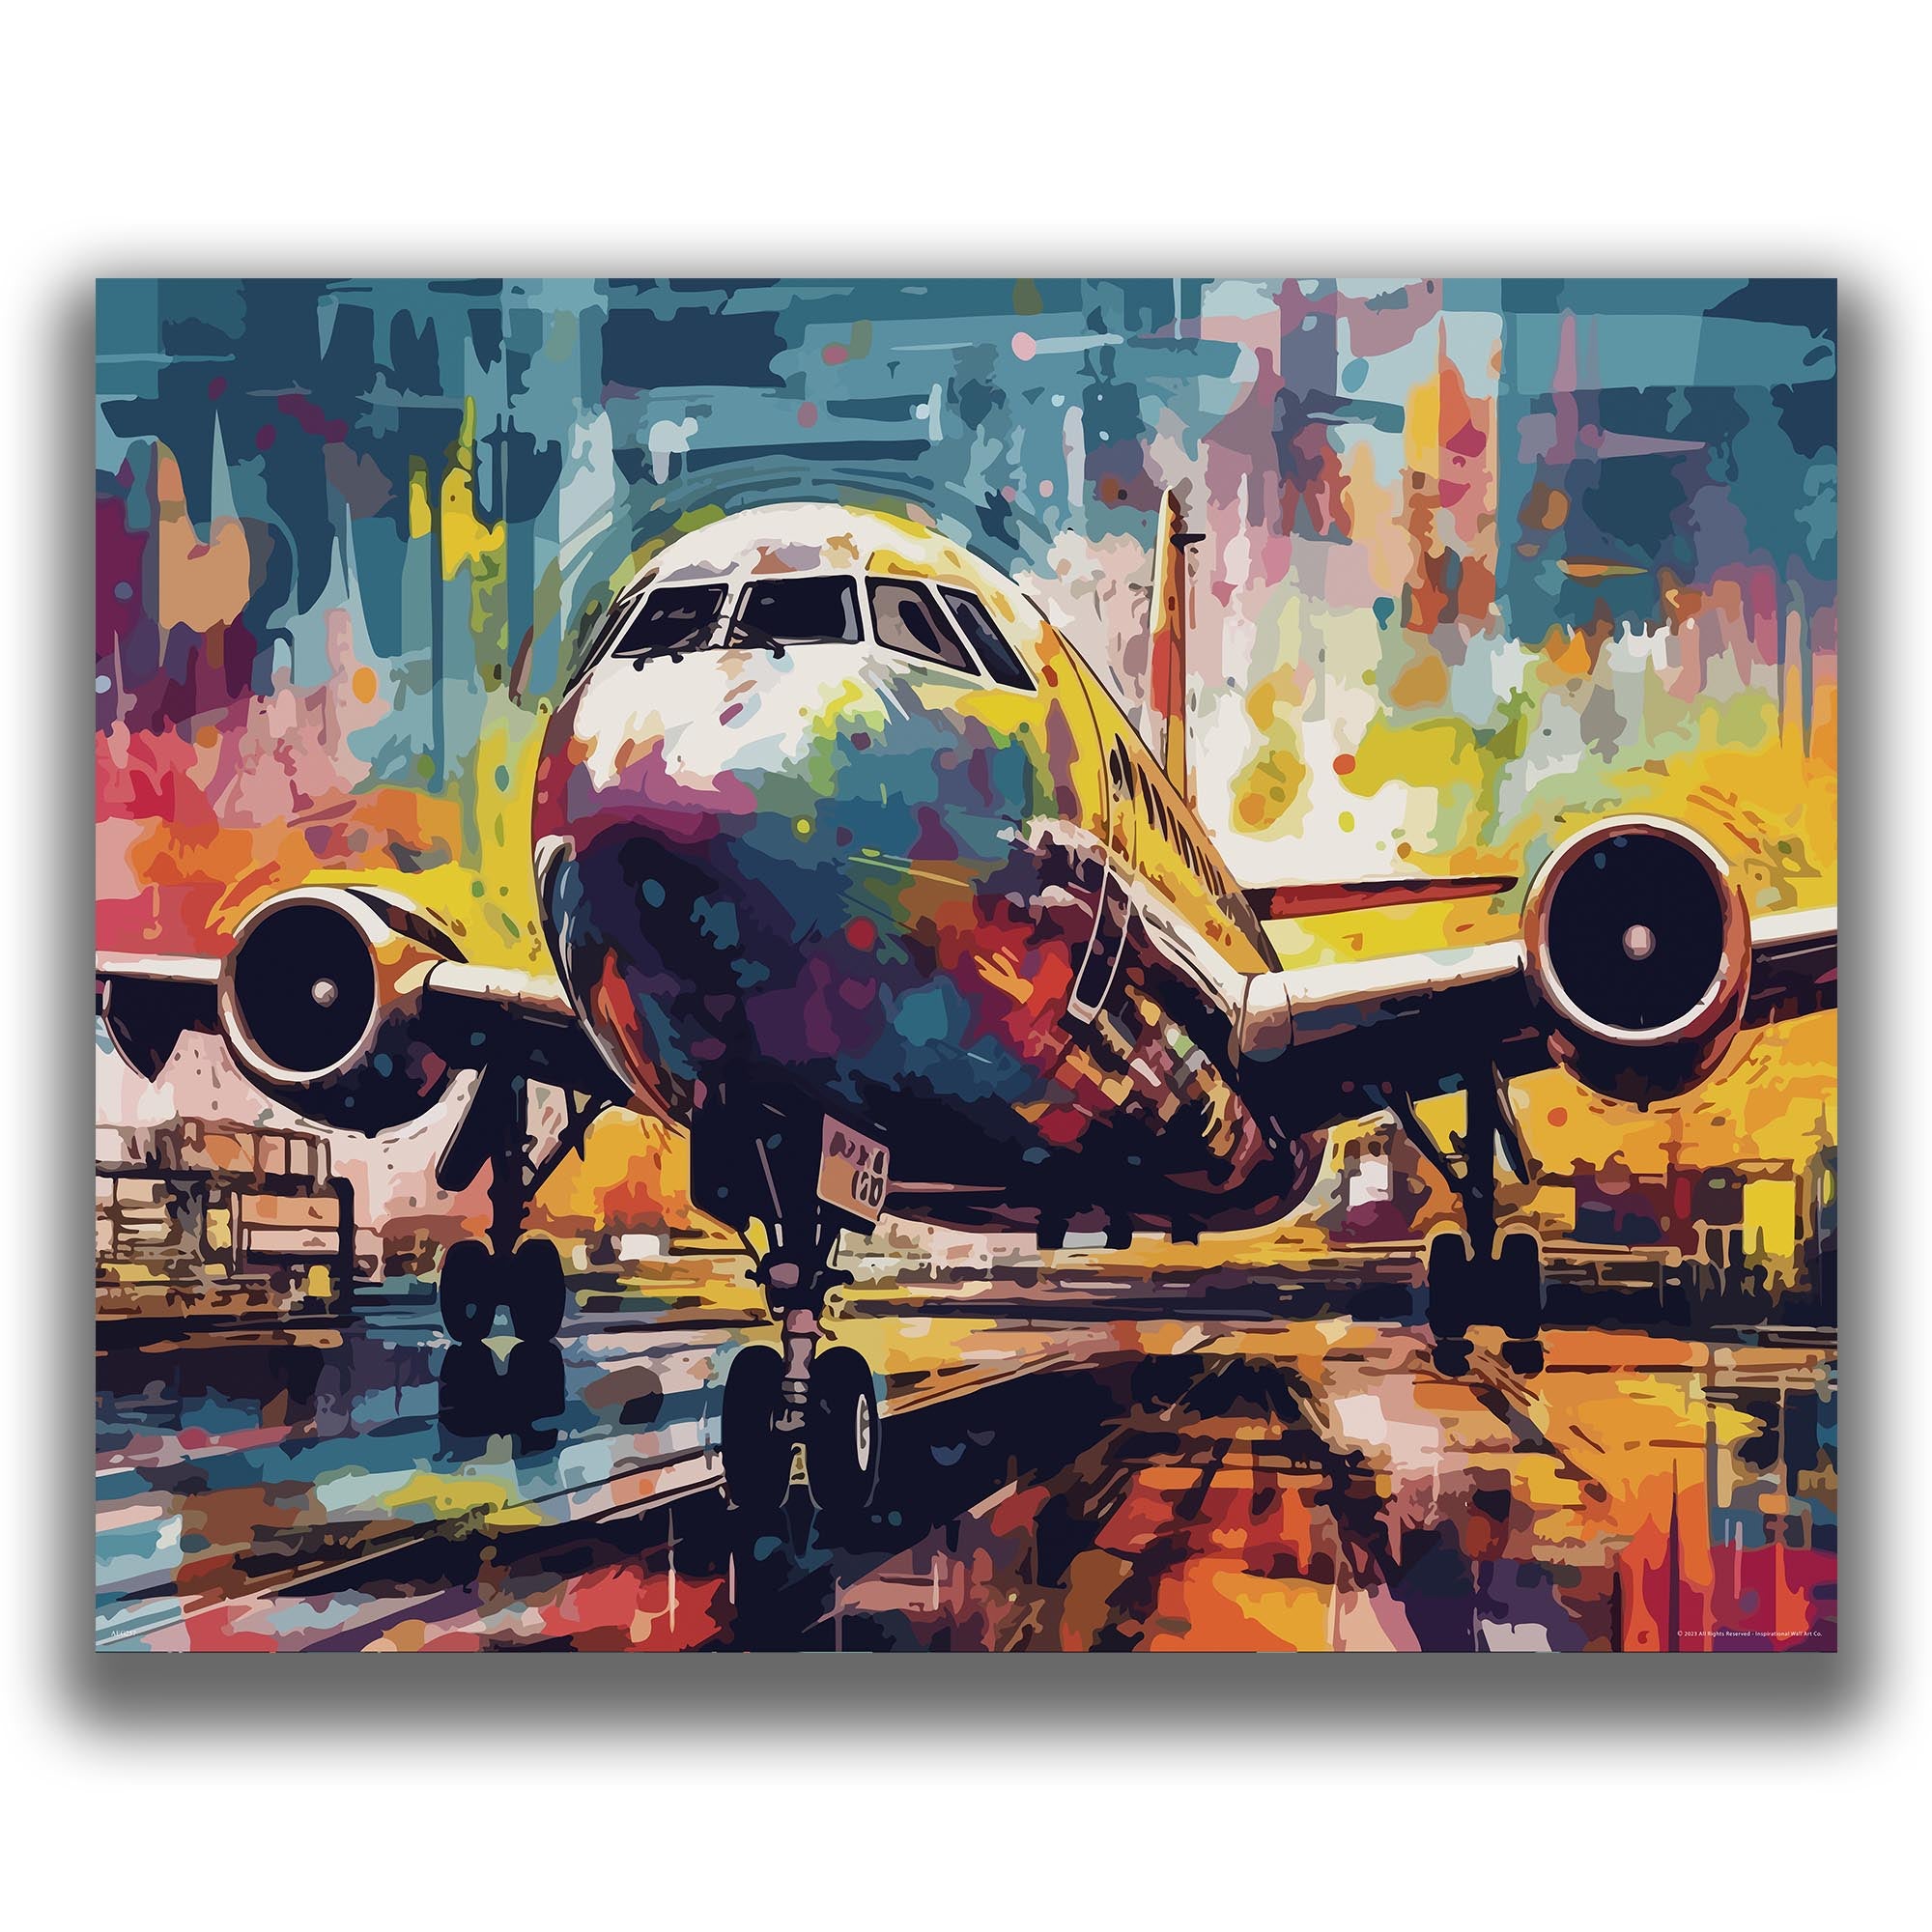 Jetset - Airplane Poster